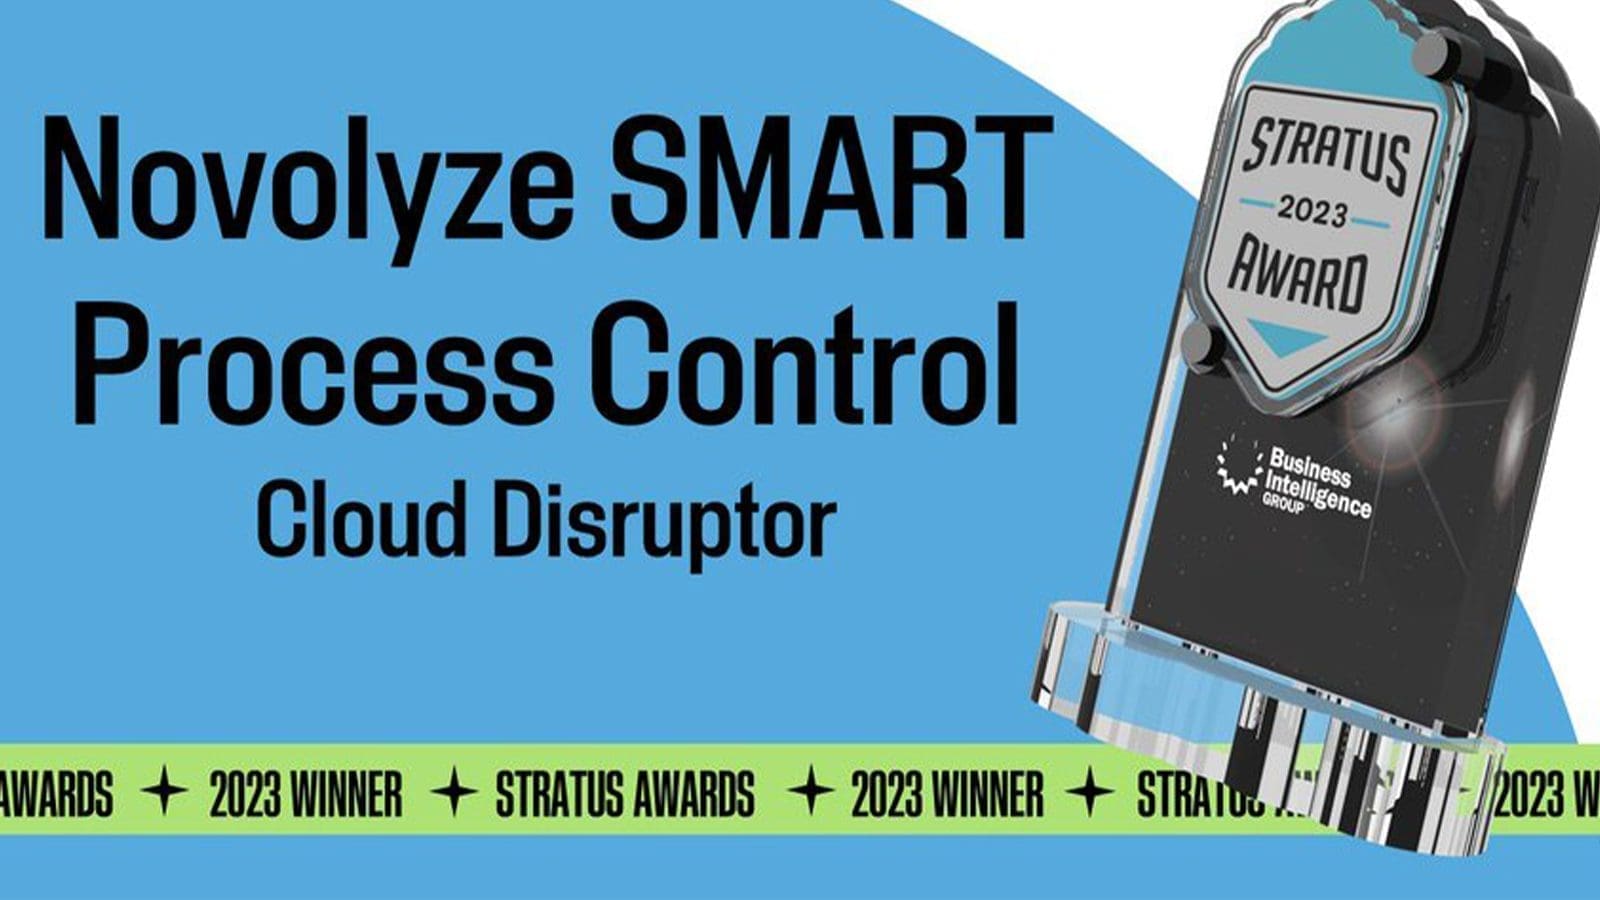 Novolyze receives prestigious Stratus Award for Cloud Computing in food safety innovation